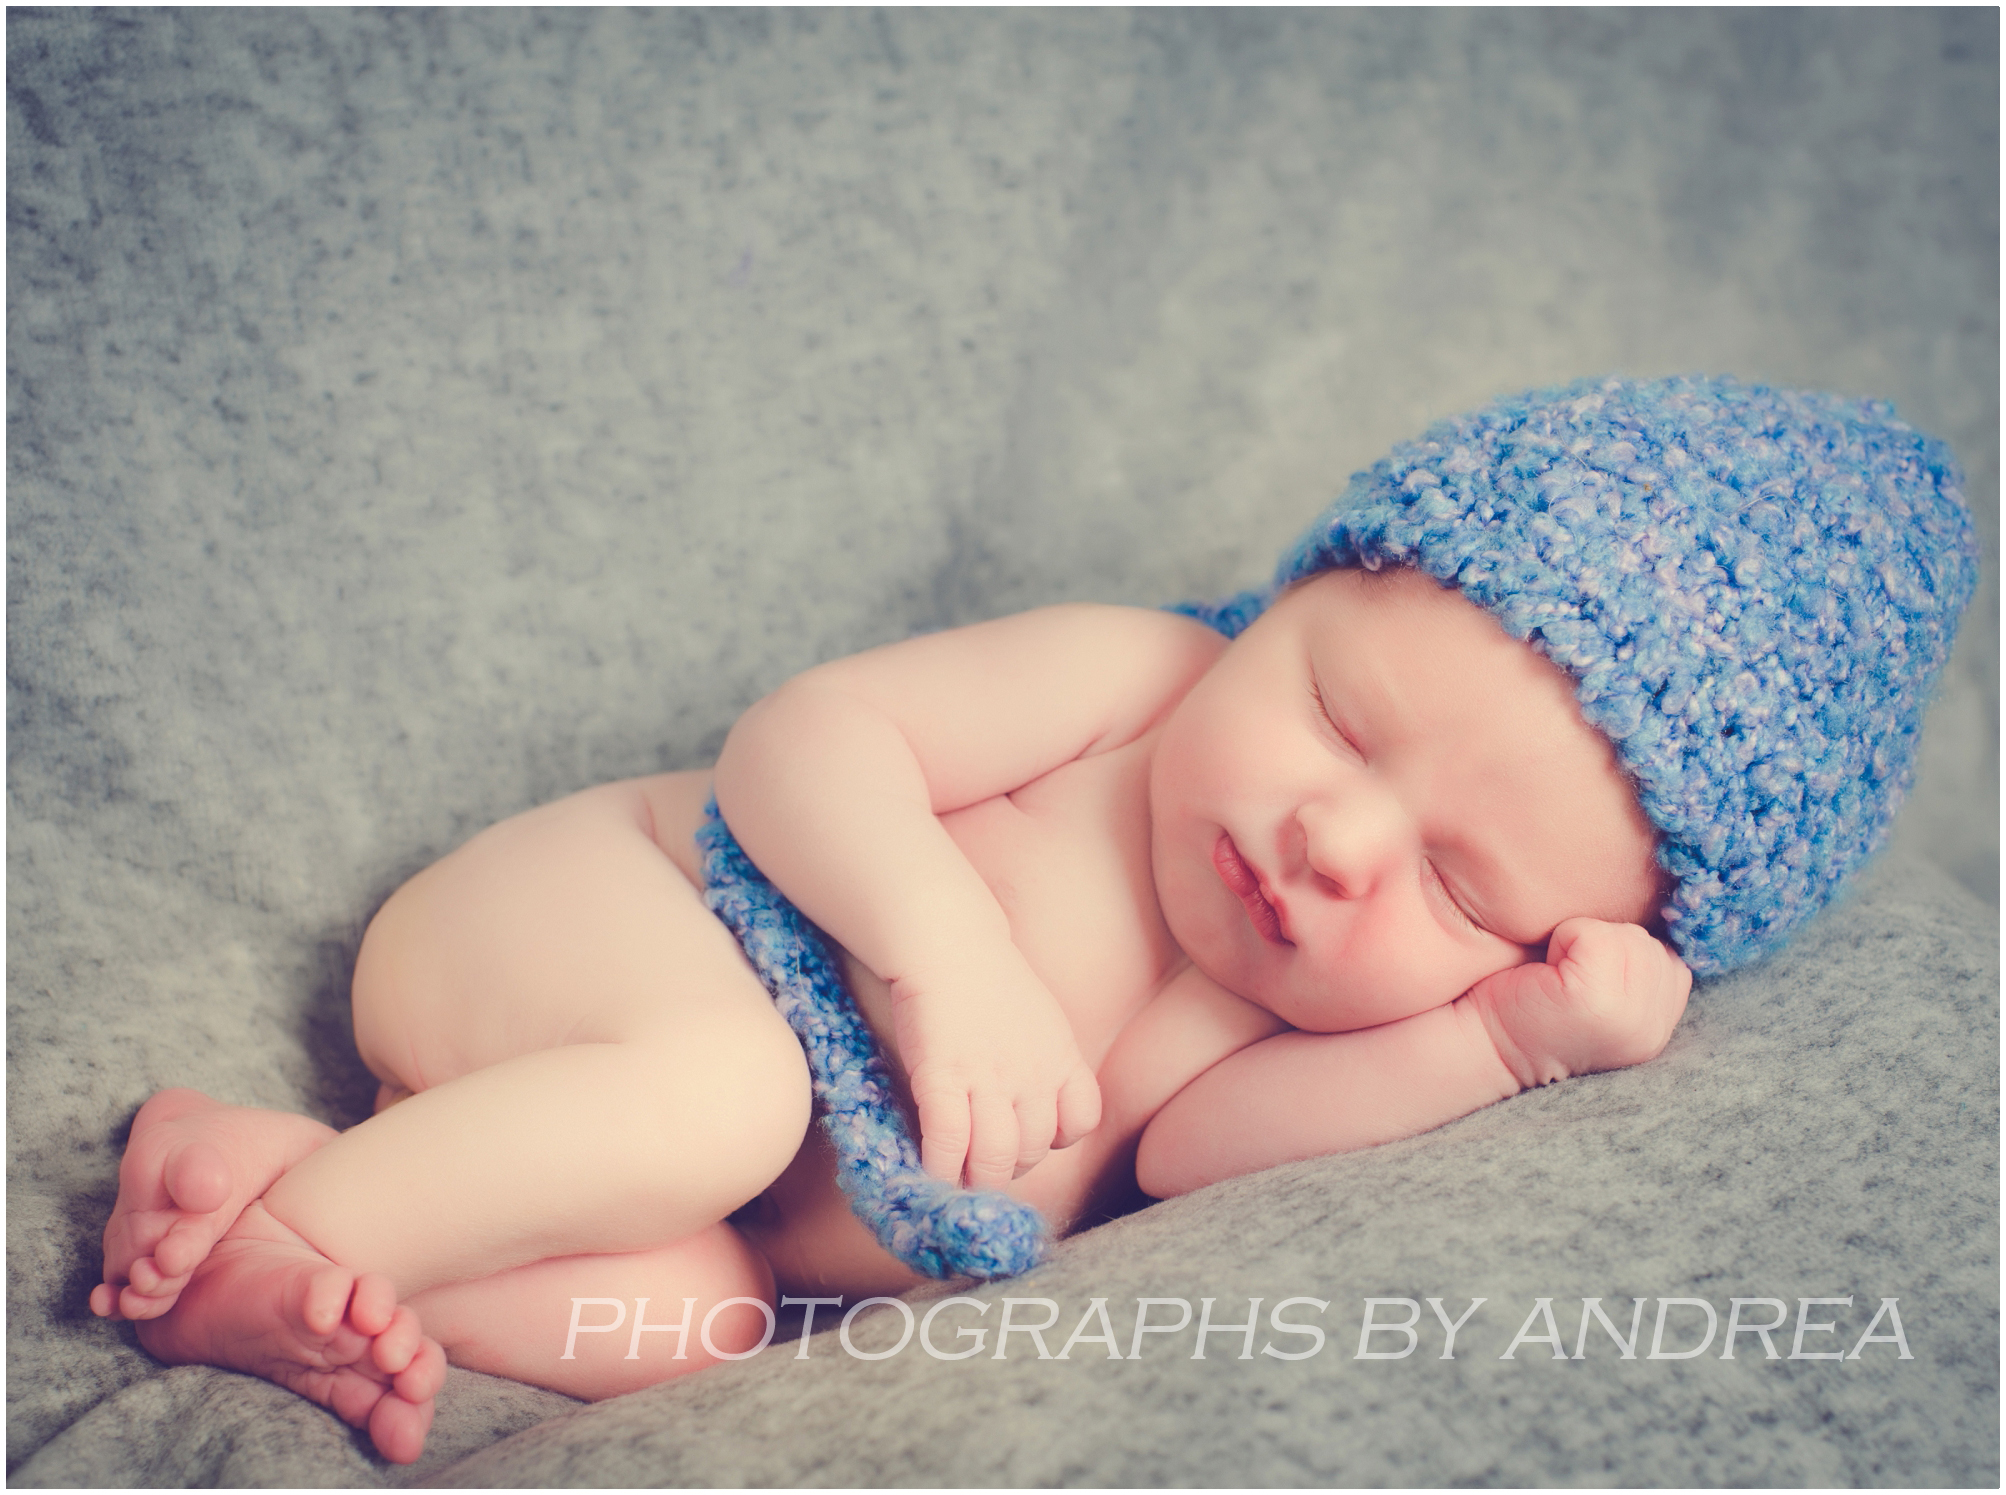 "South Carolina Newborn Photography"